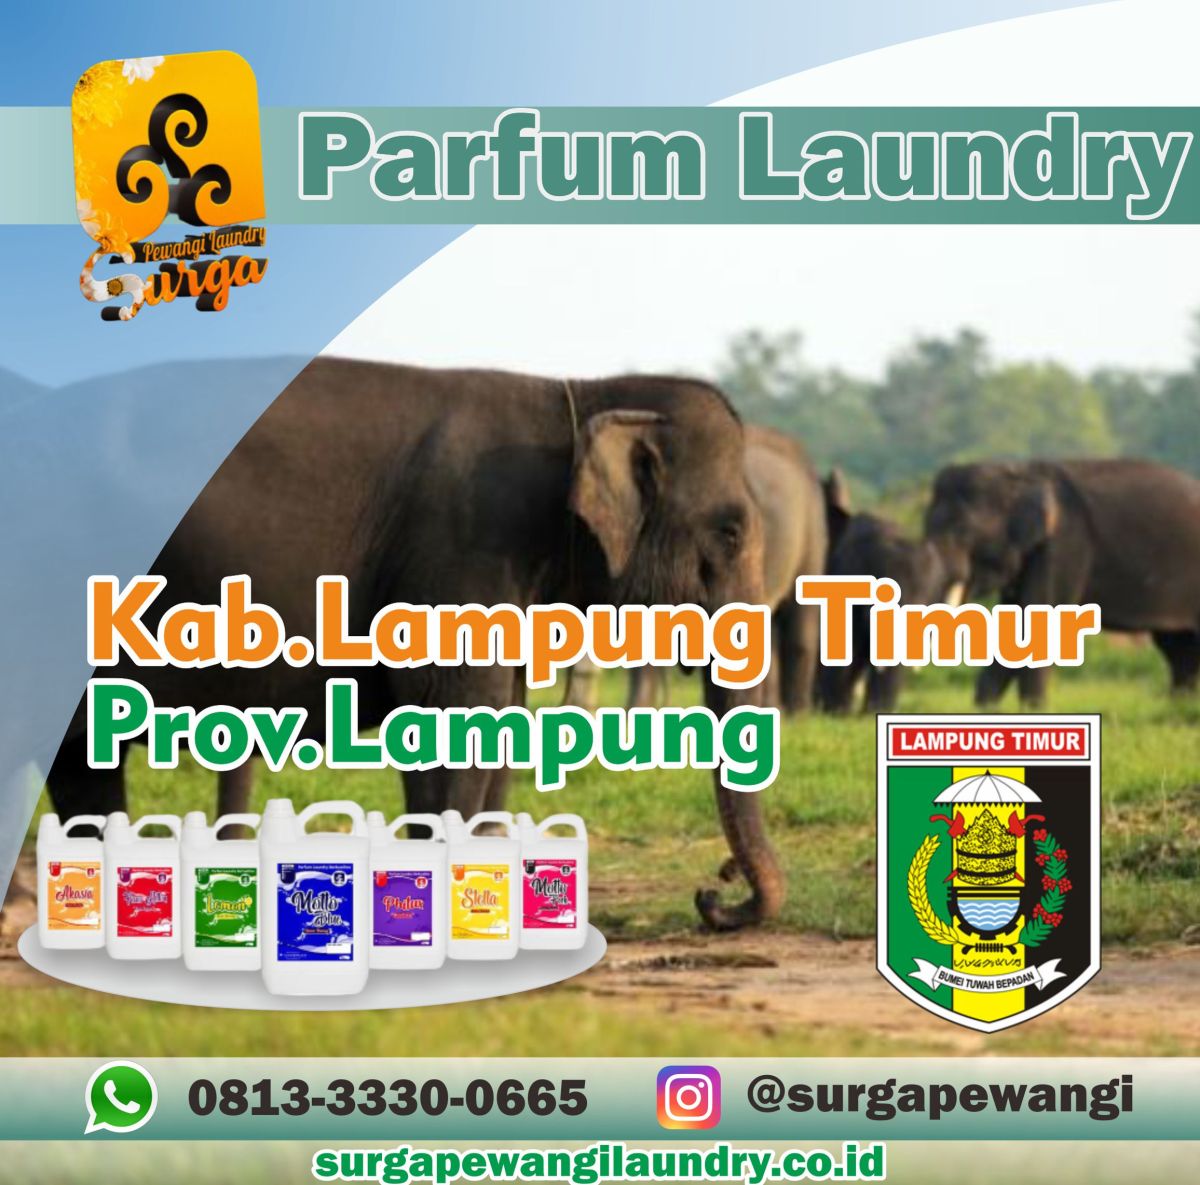 Parfum Laundry Lampung Timur, Prov Lampung